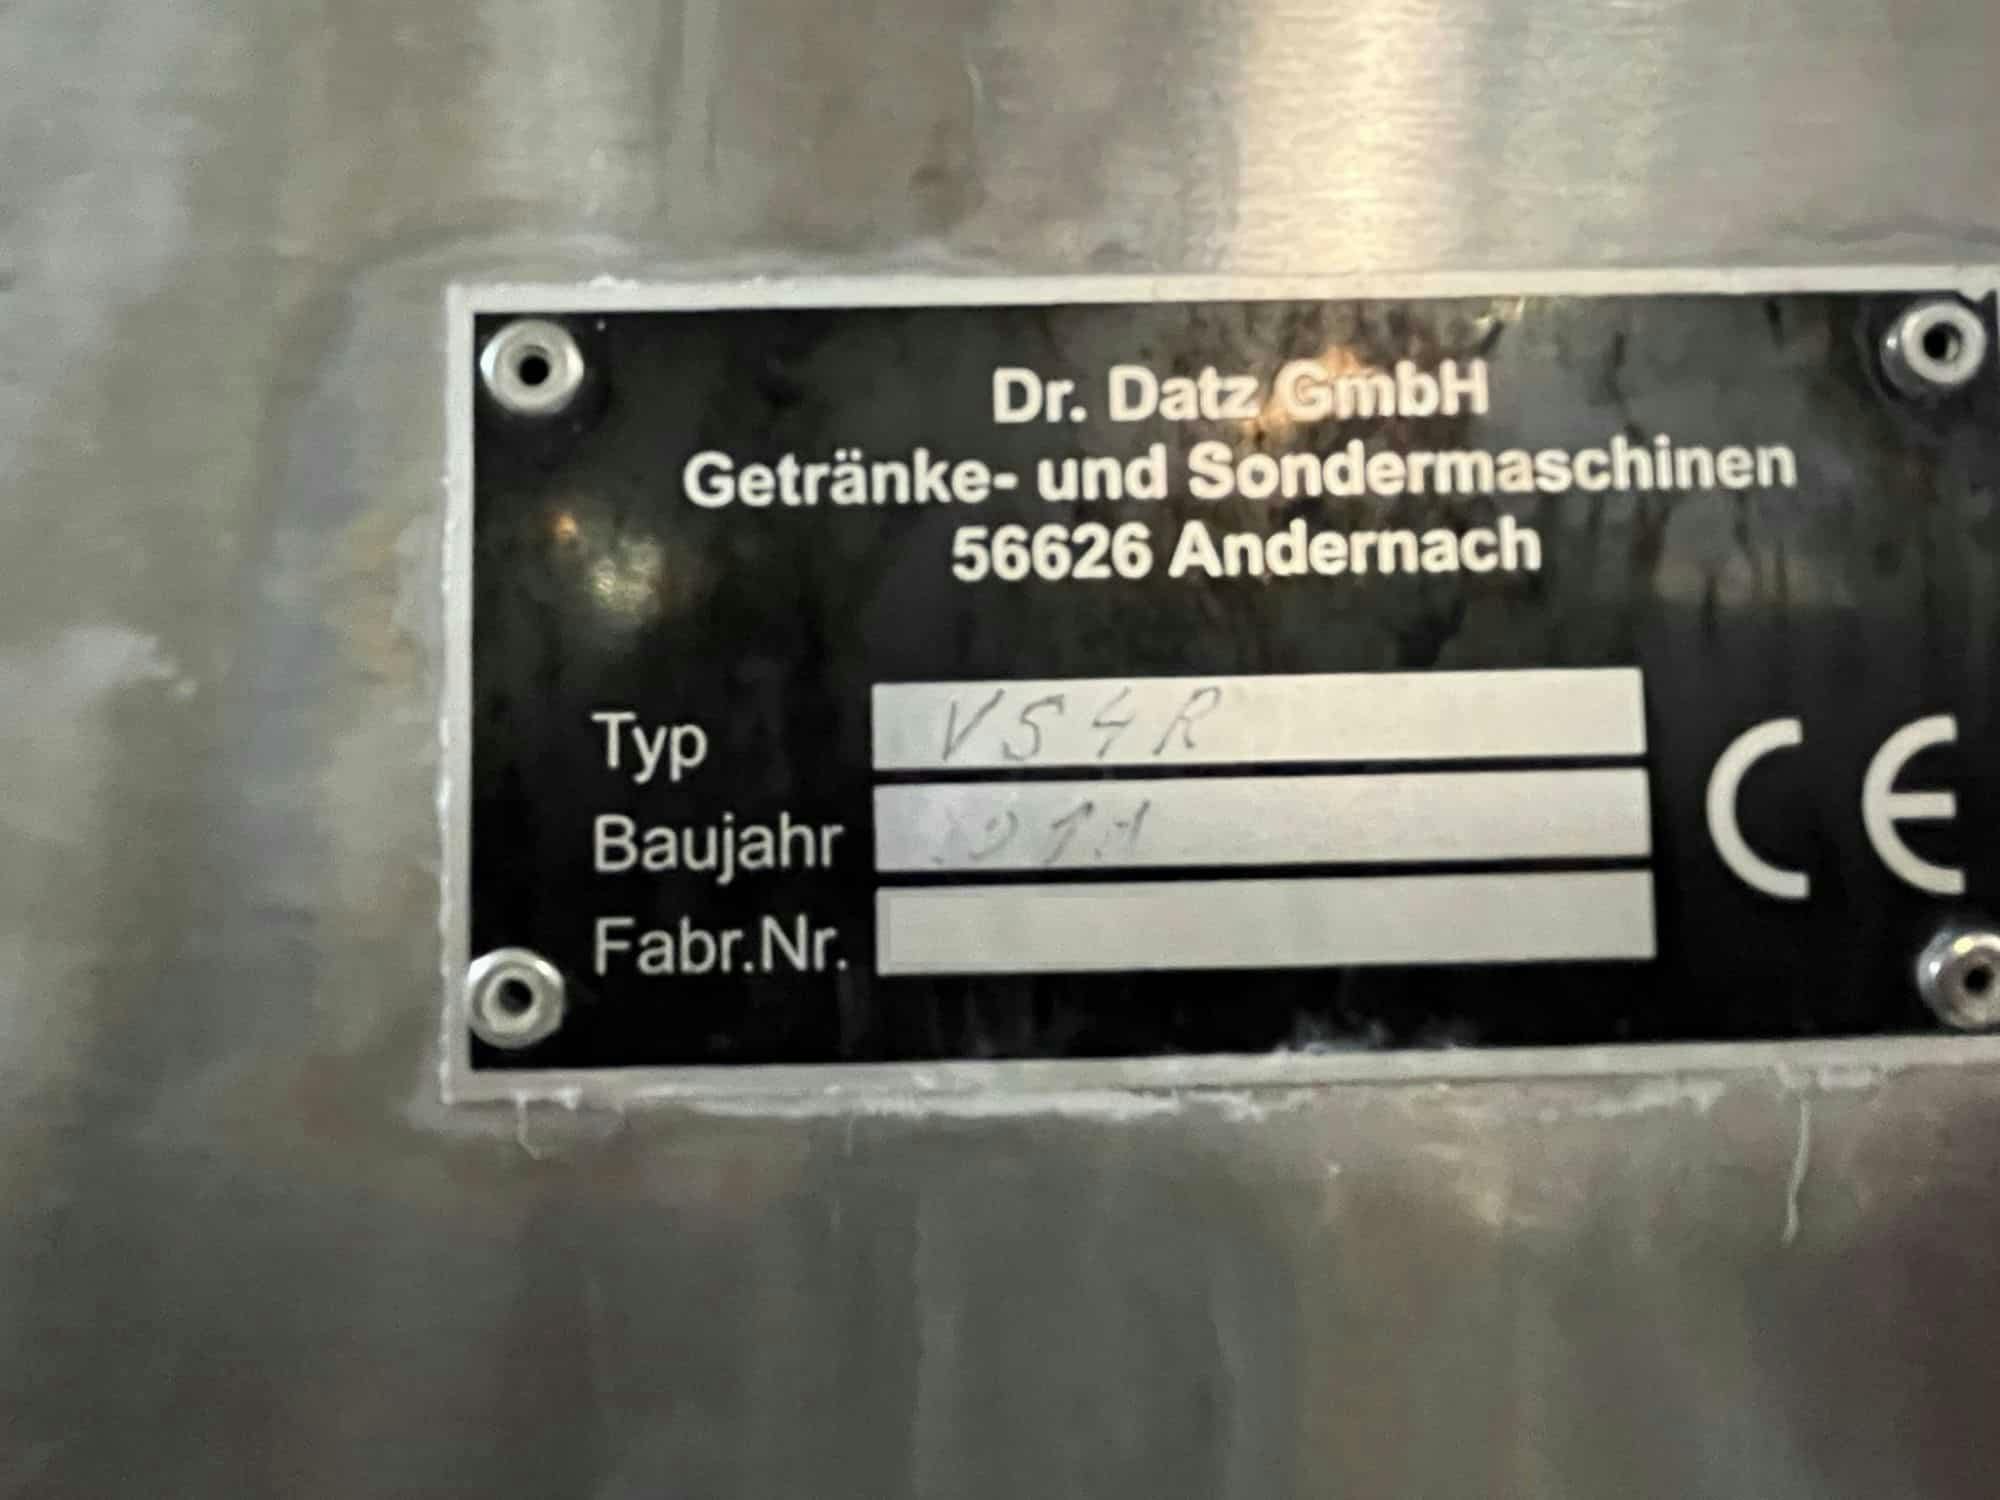 Placa de identificación de Dr. Datz GmbH Getränke- und Sondermaschinenbau VS4R